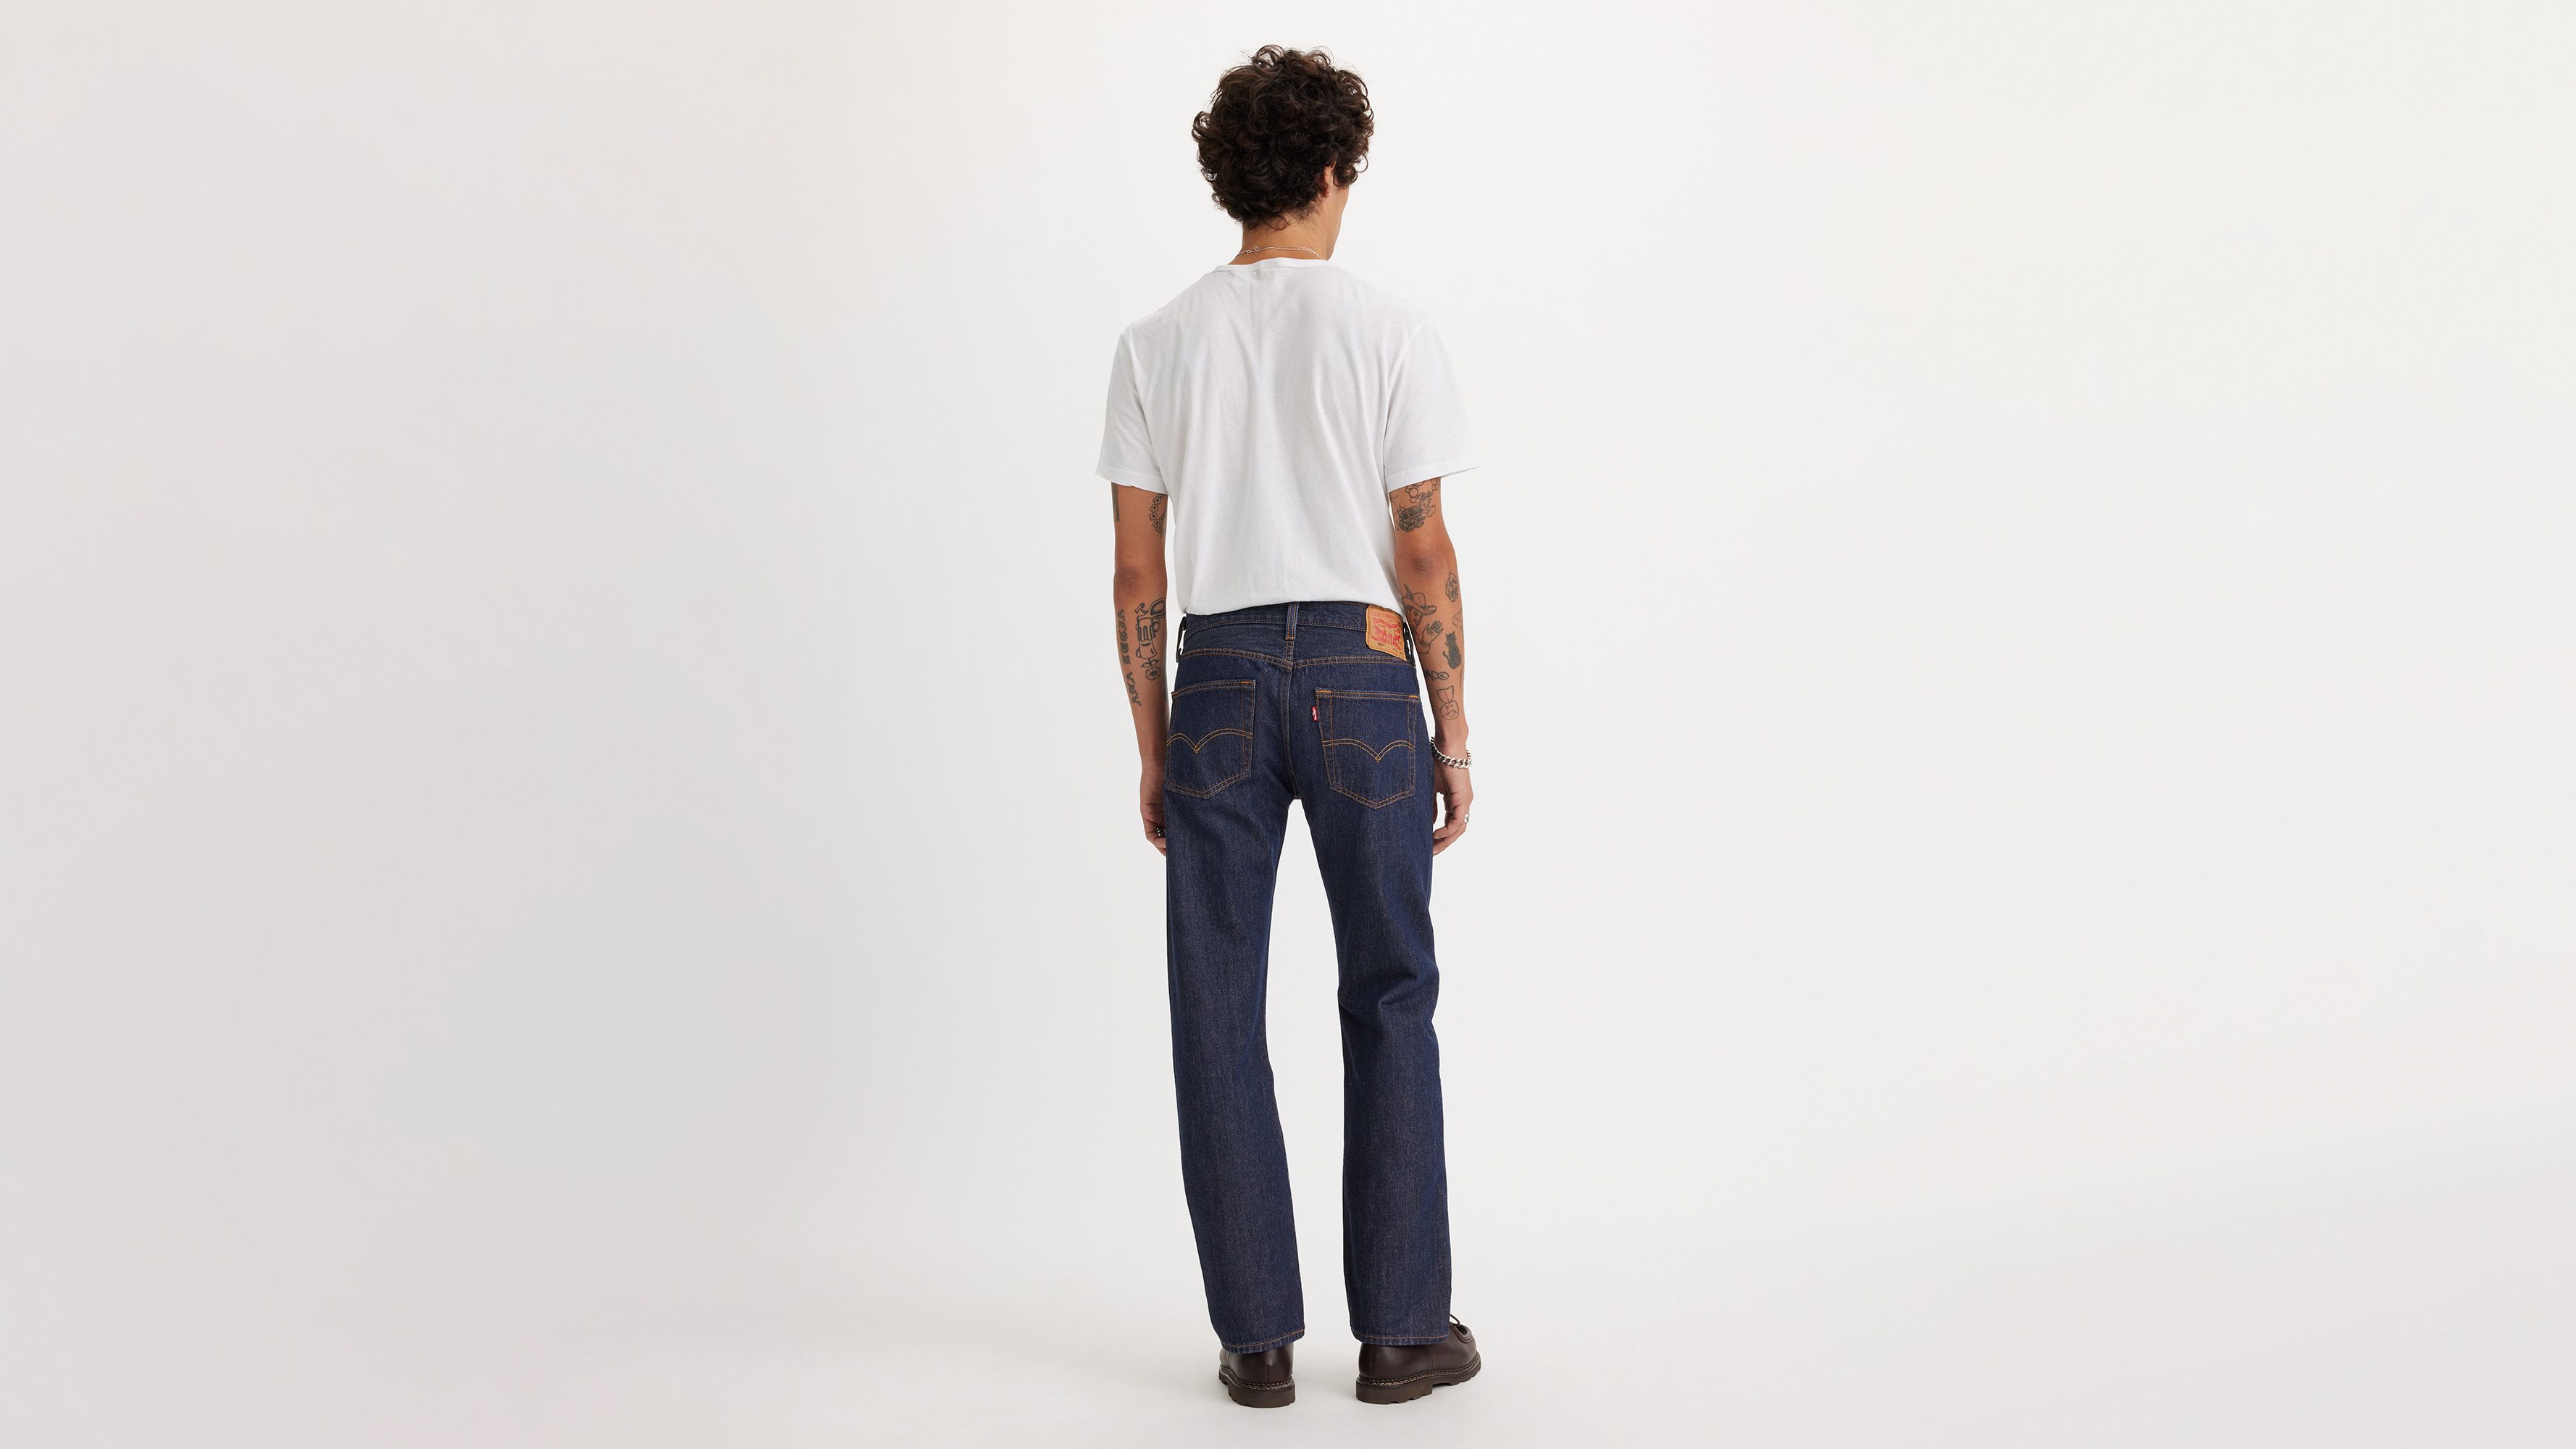 levi's 501 original straight jeans one wash